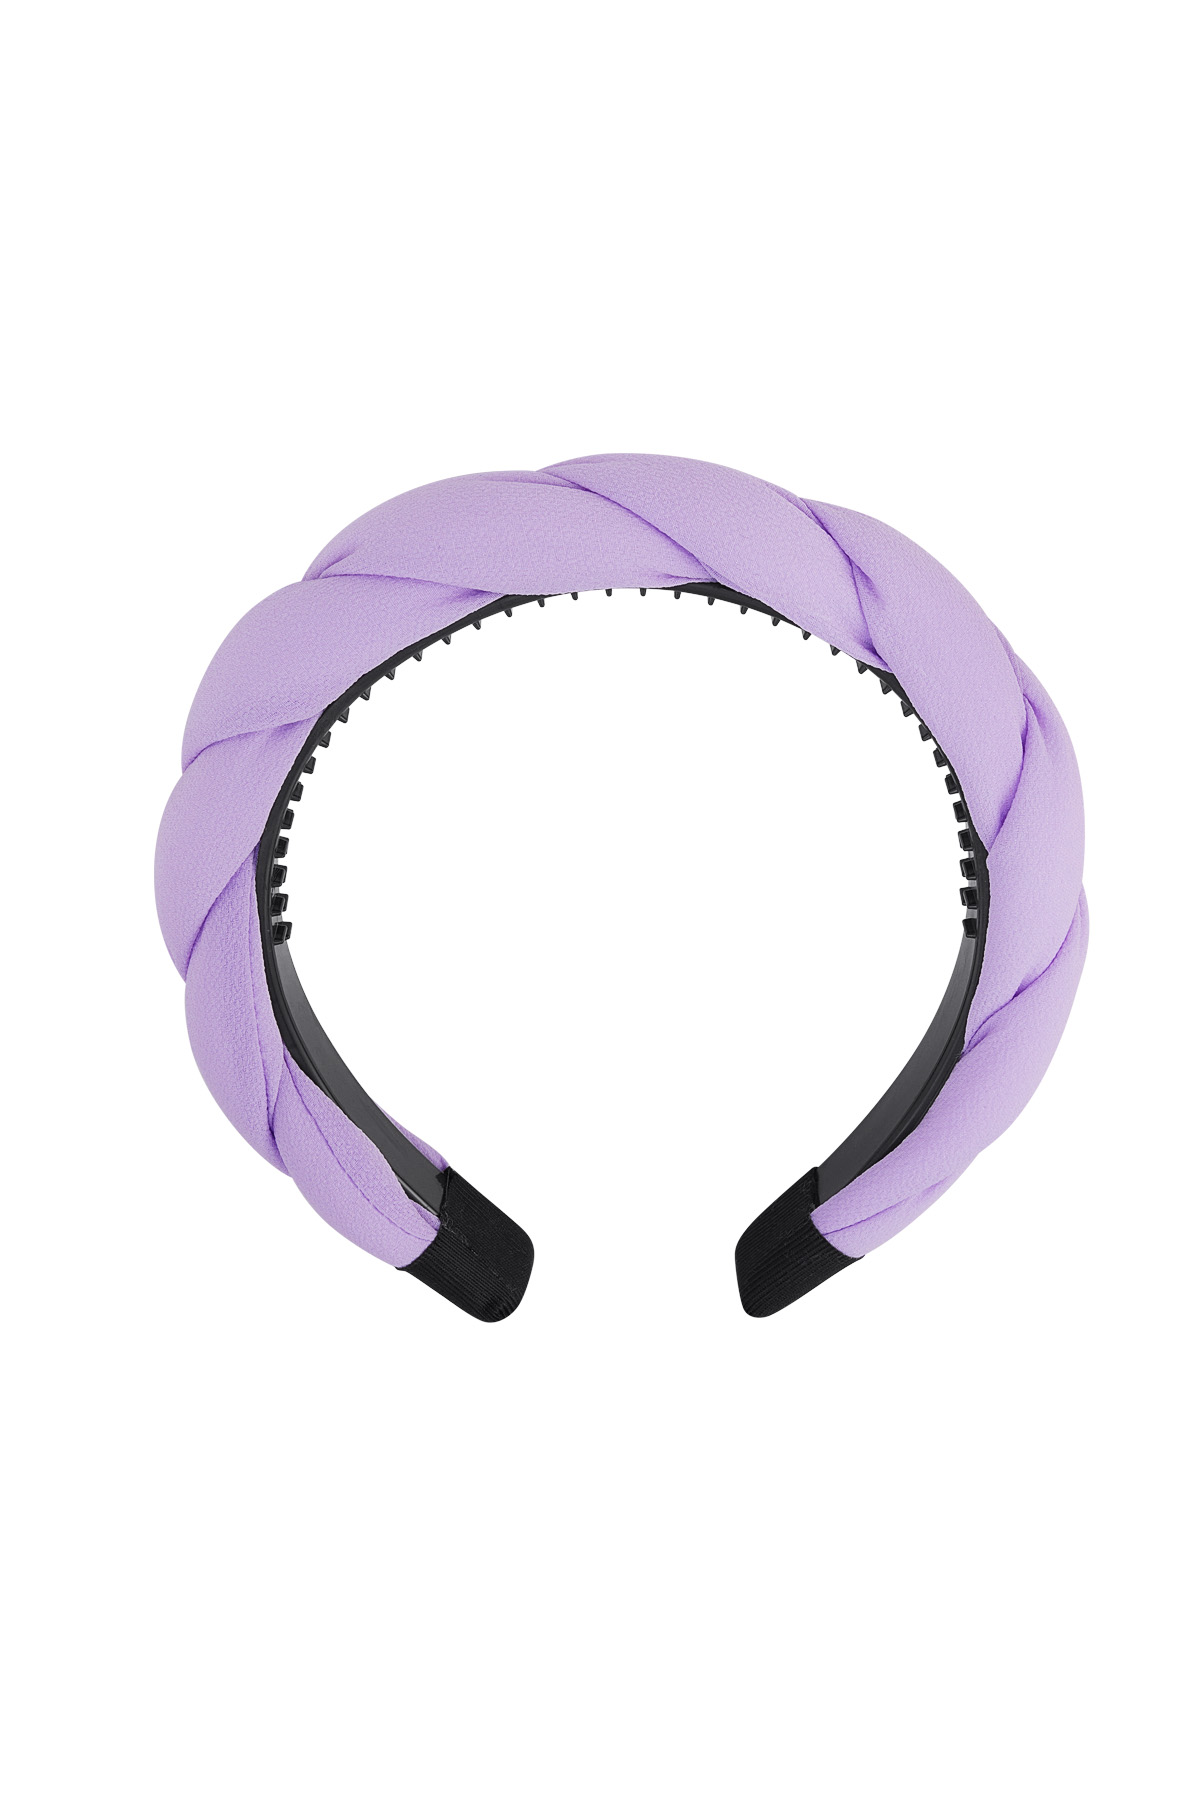 Haarband vlechtdetail - lila Paars Plastic